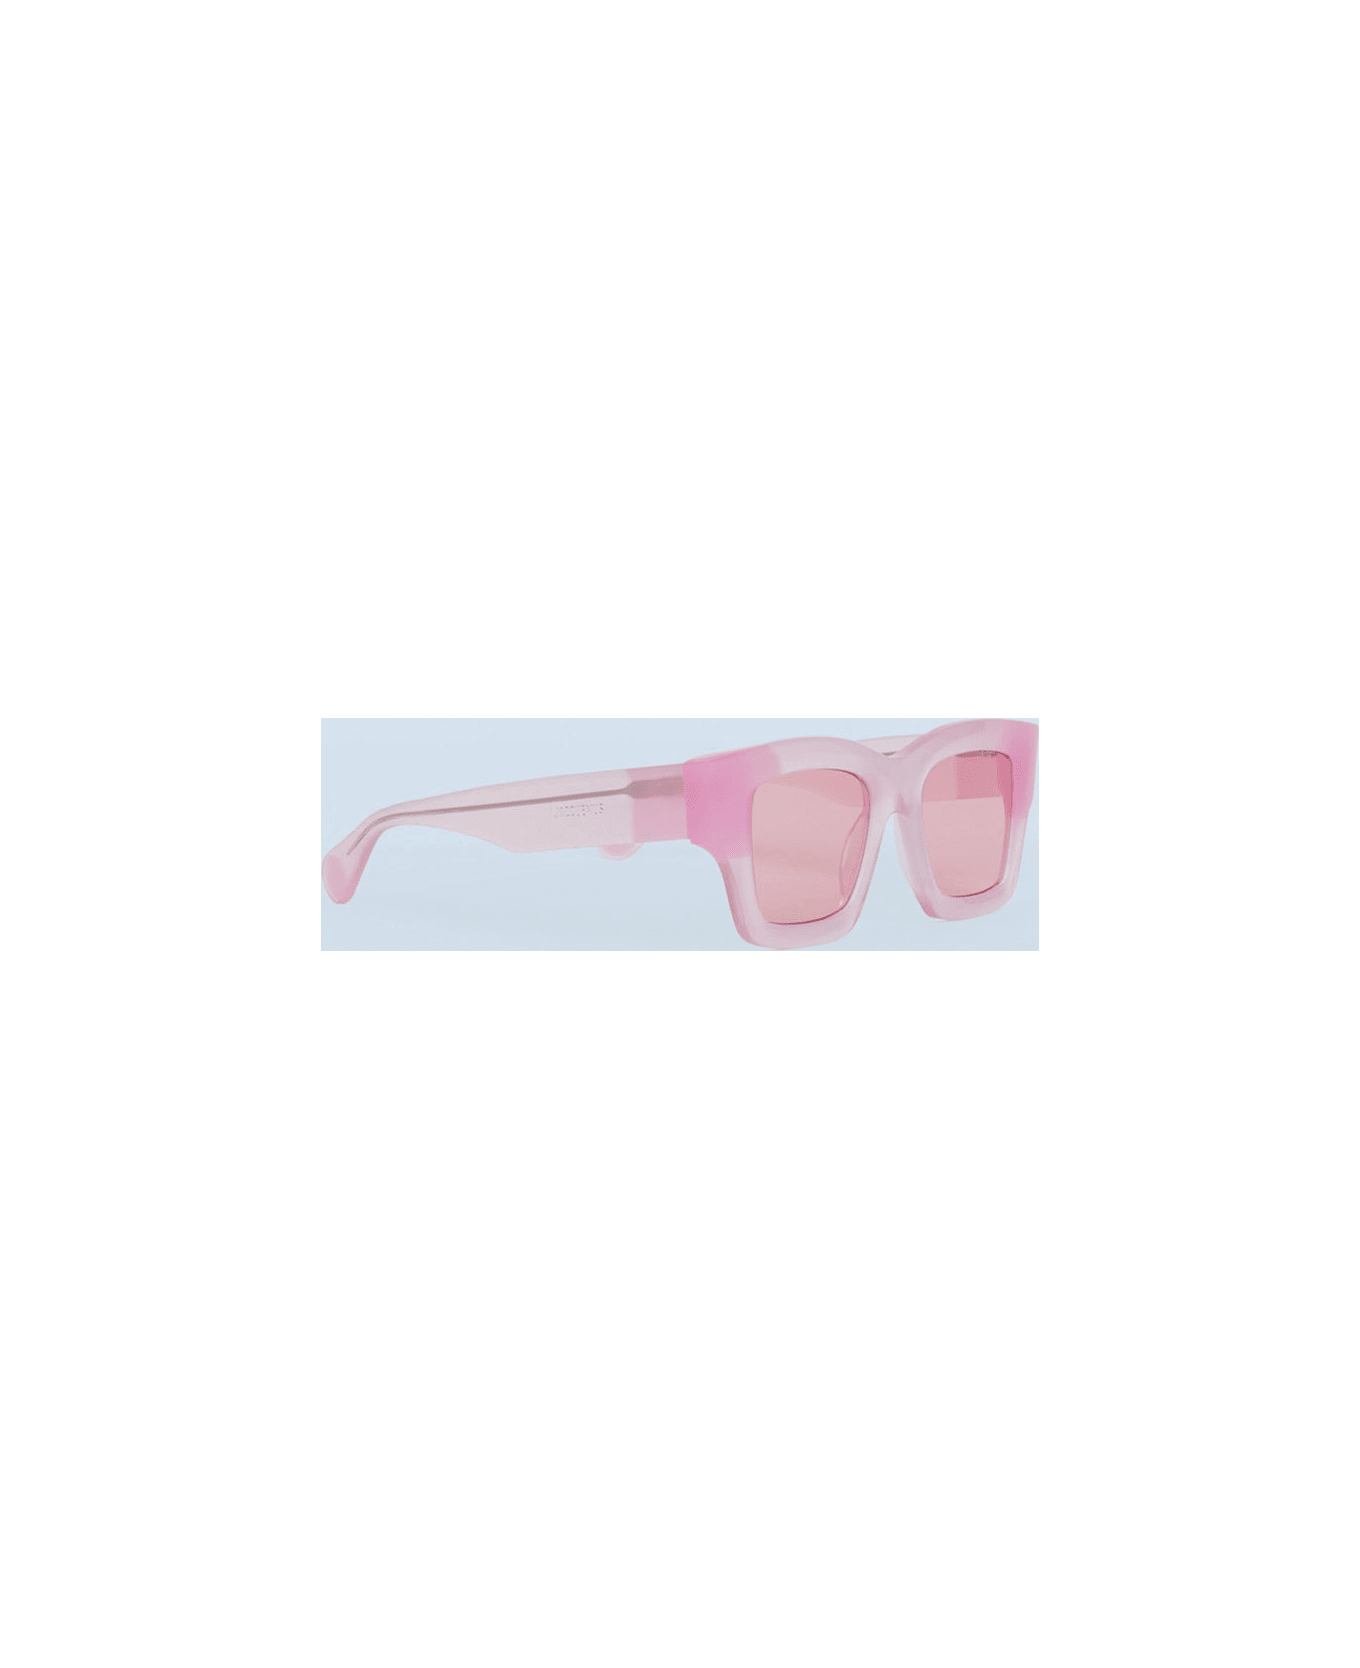 Jacquemus Les Lunettes Baci - Multi Pink Sunglasses - pink